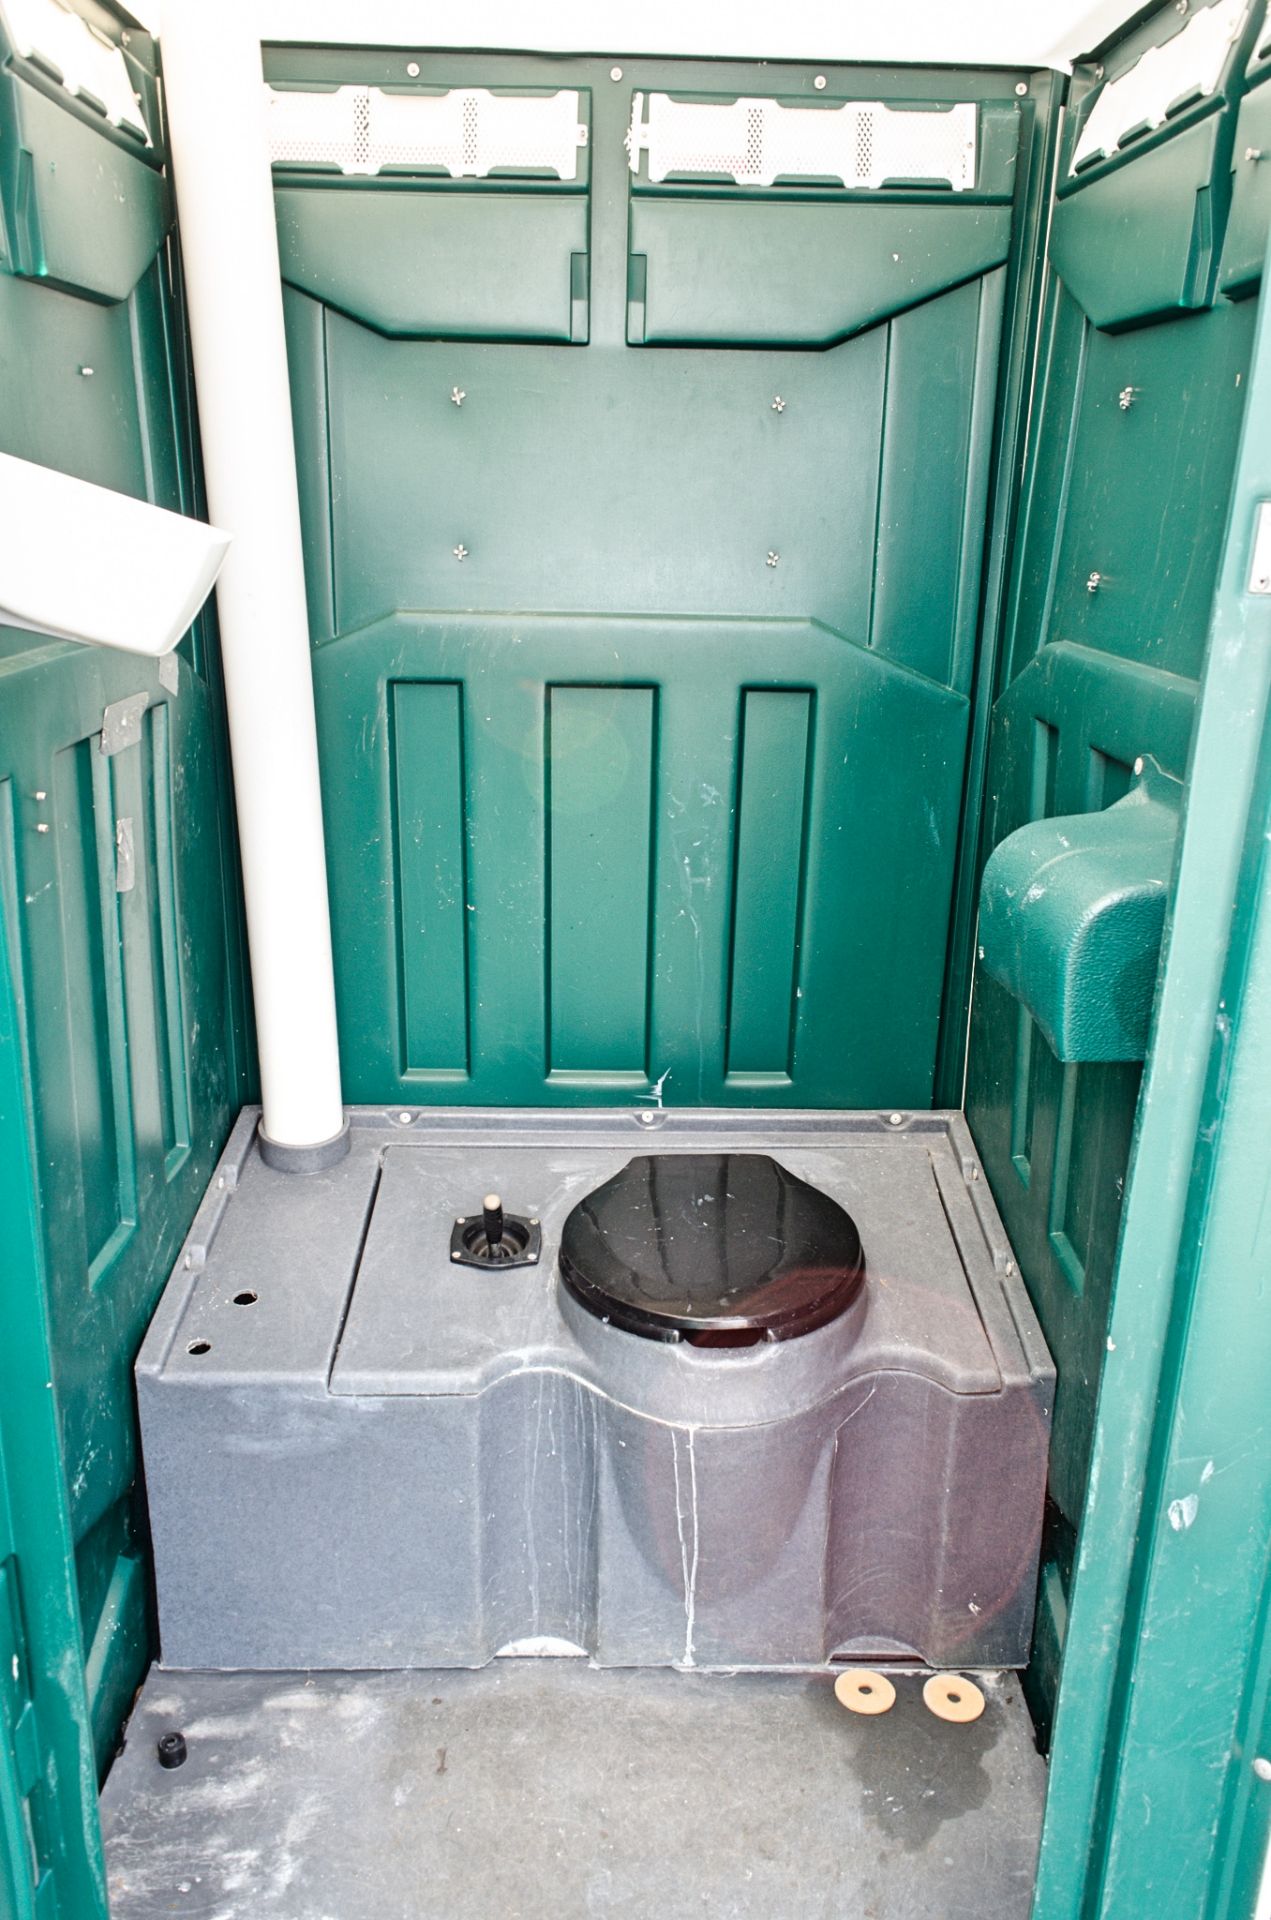 Plastic portable toilet unit - Image 2 of 2